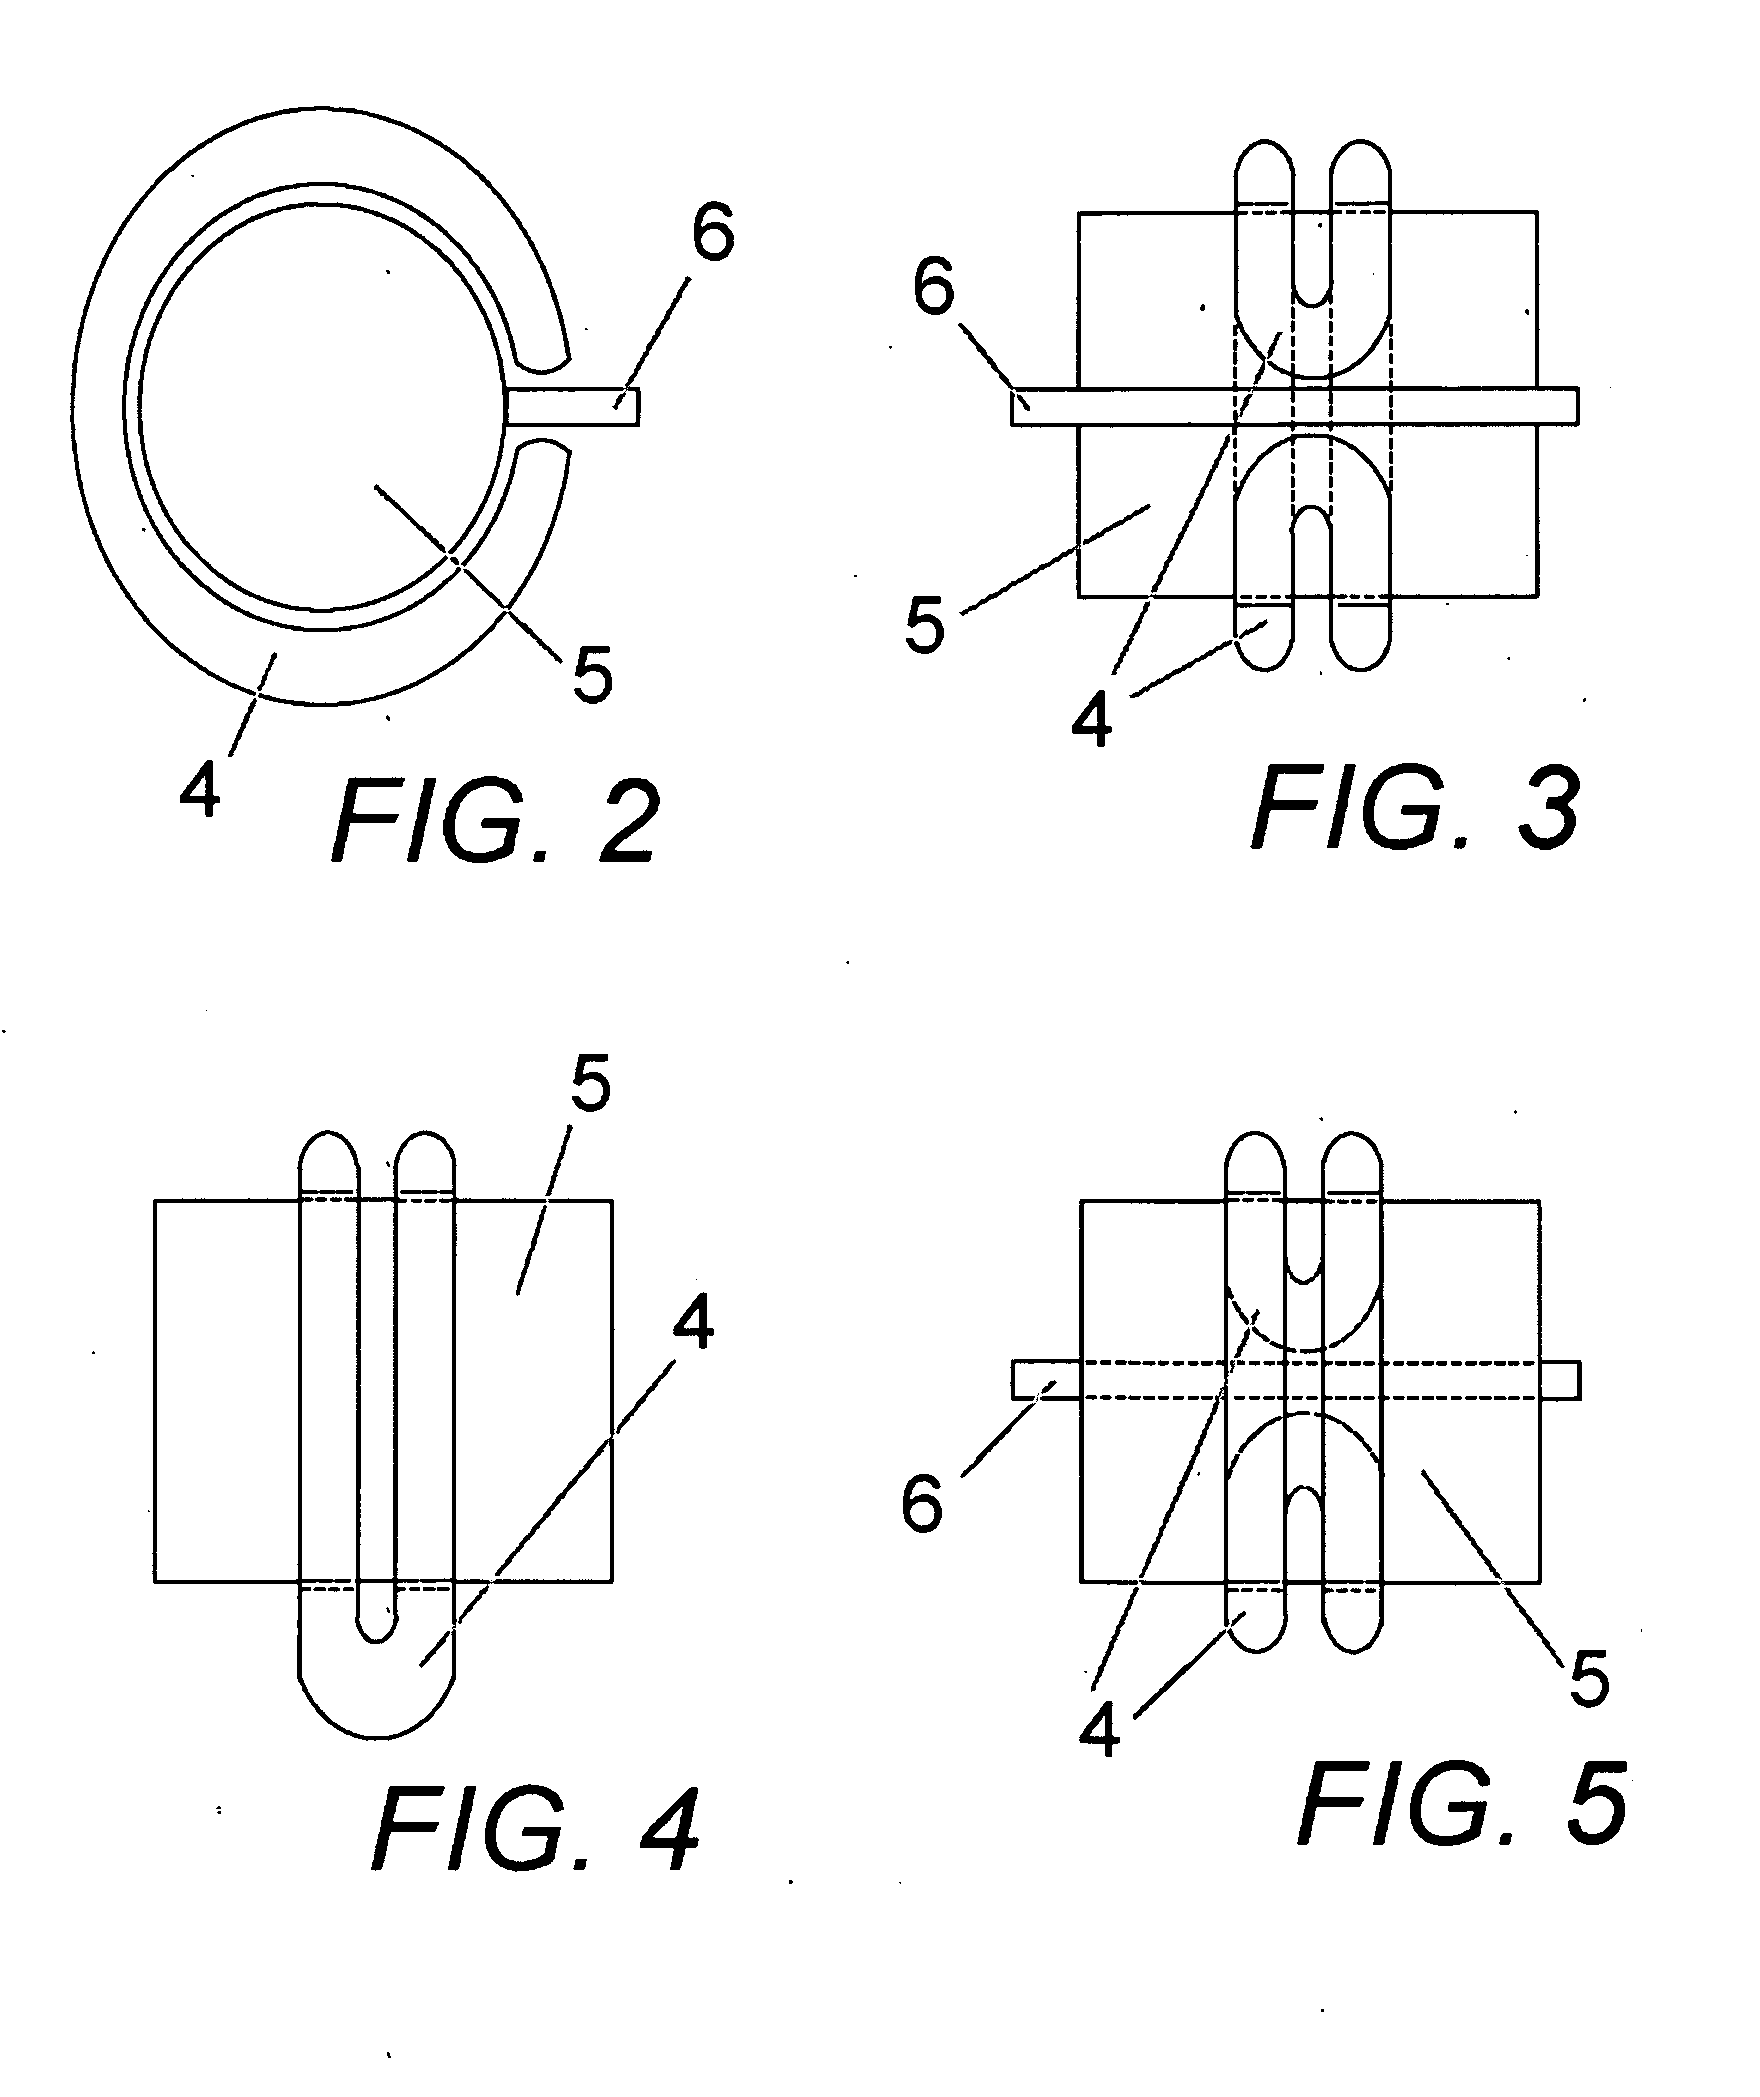 Flywheel generator system having open shaped loop coils